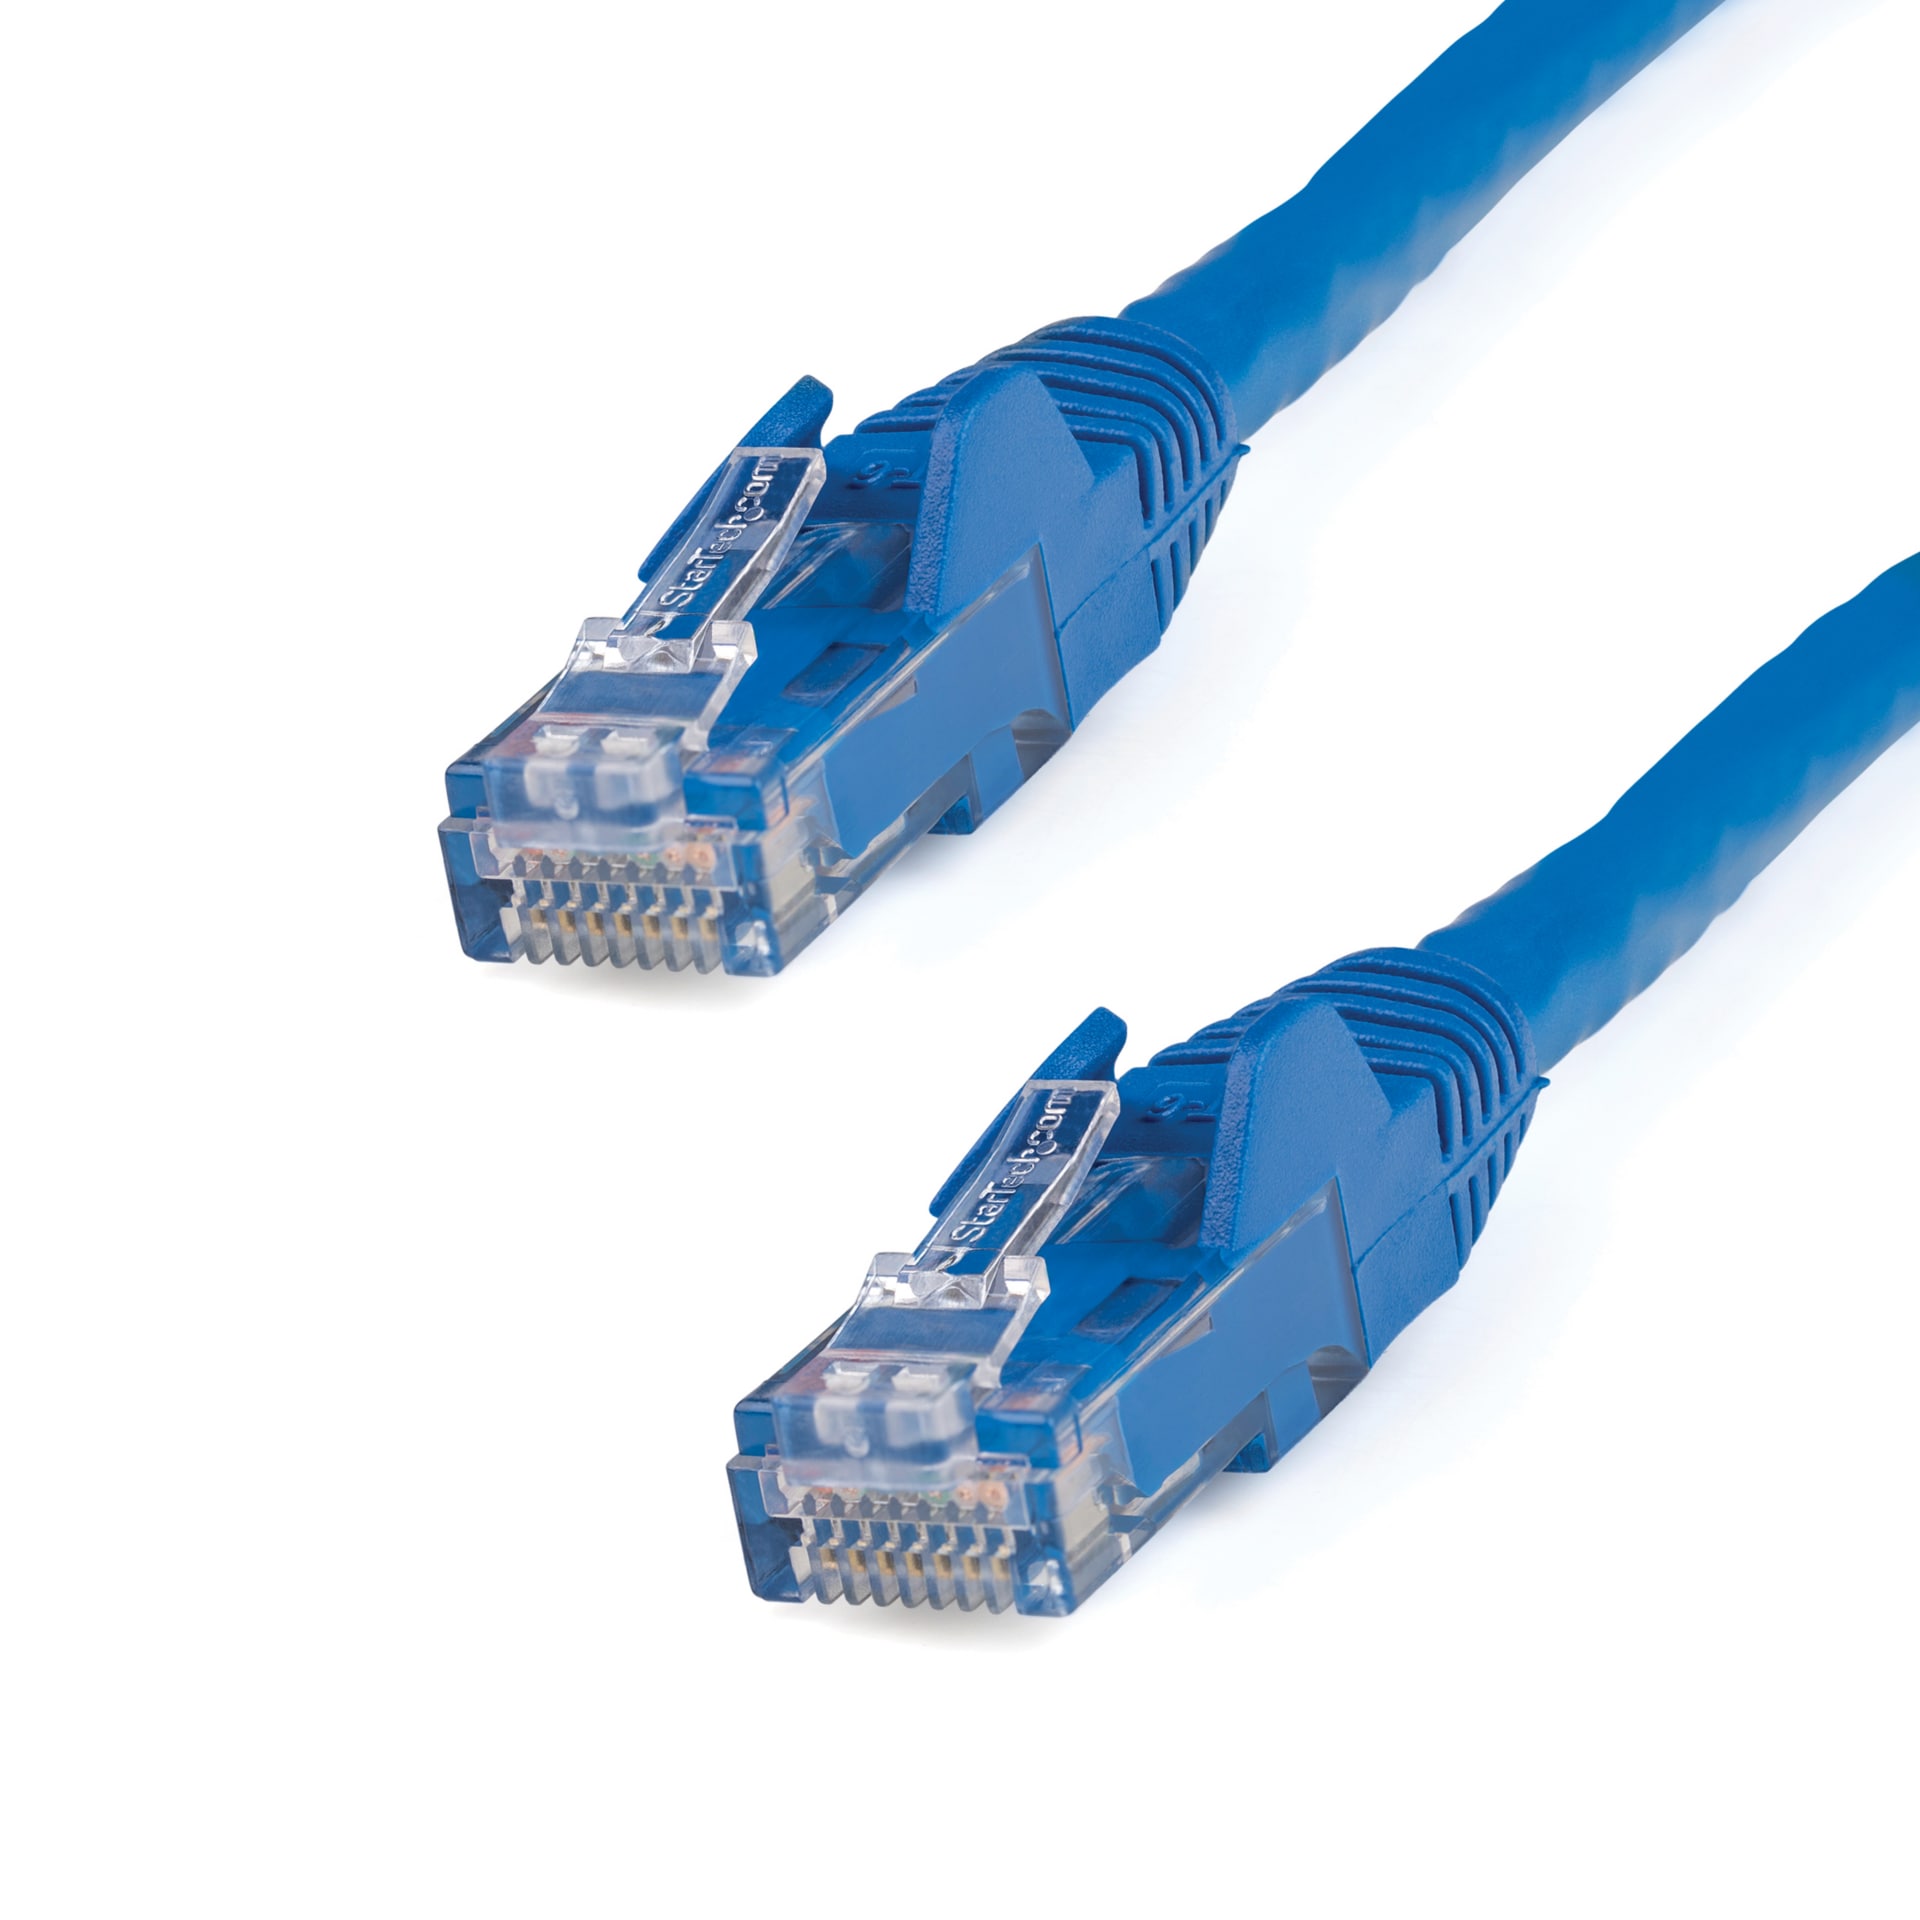 Sur realeza Torrente StarTech.com 3ft CAT6 Ethernet Cable Blue Snagless UTP CAT 6 Gigabit  Cord/Wire 100W PoE 650MHz - N6PATCH3BL - Cat 6 Cables - CDW.com